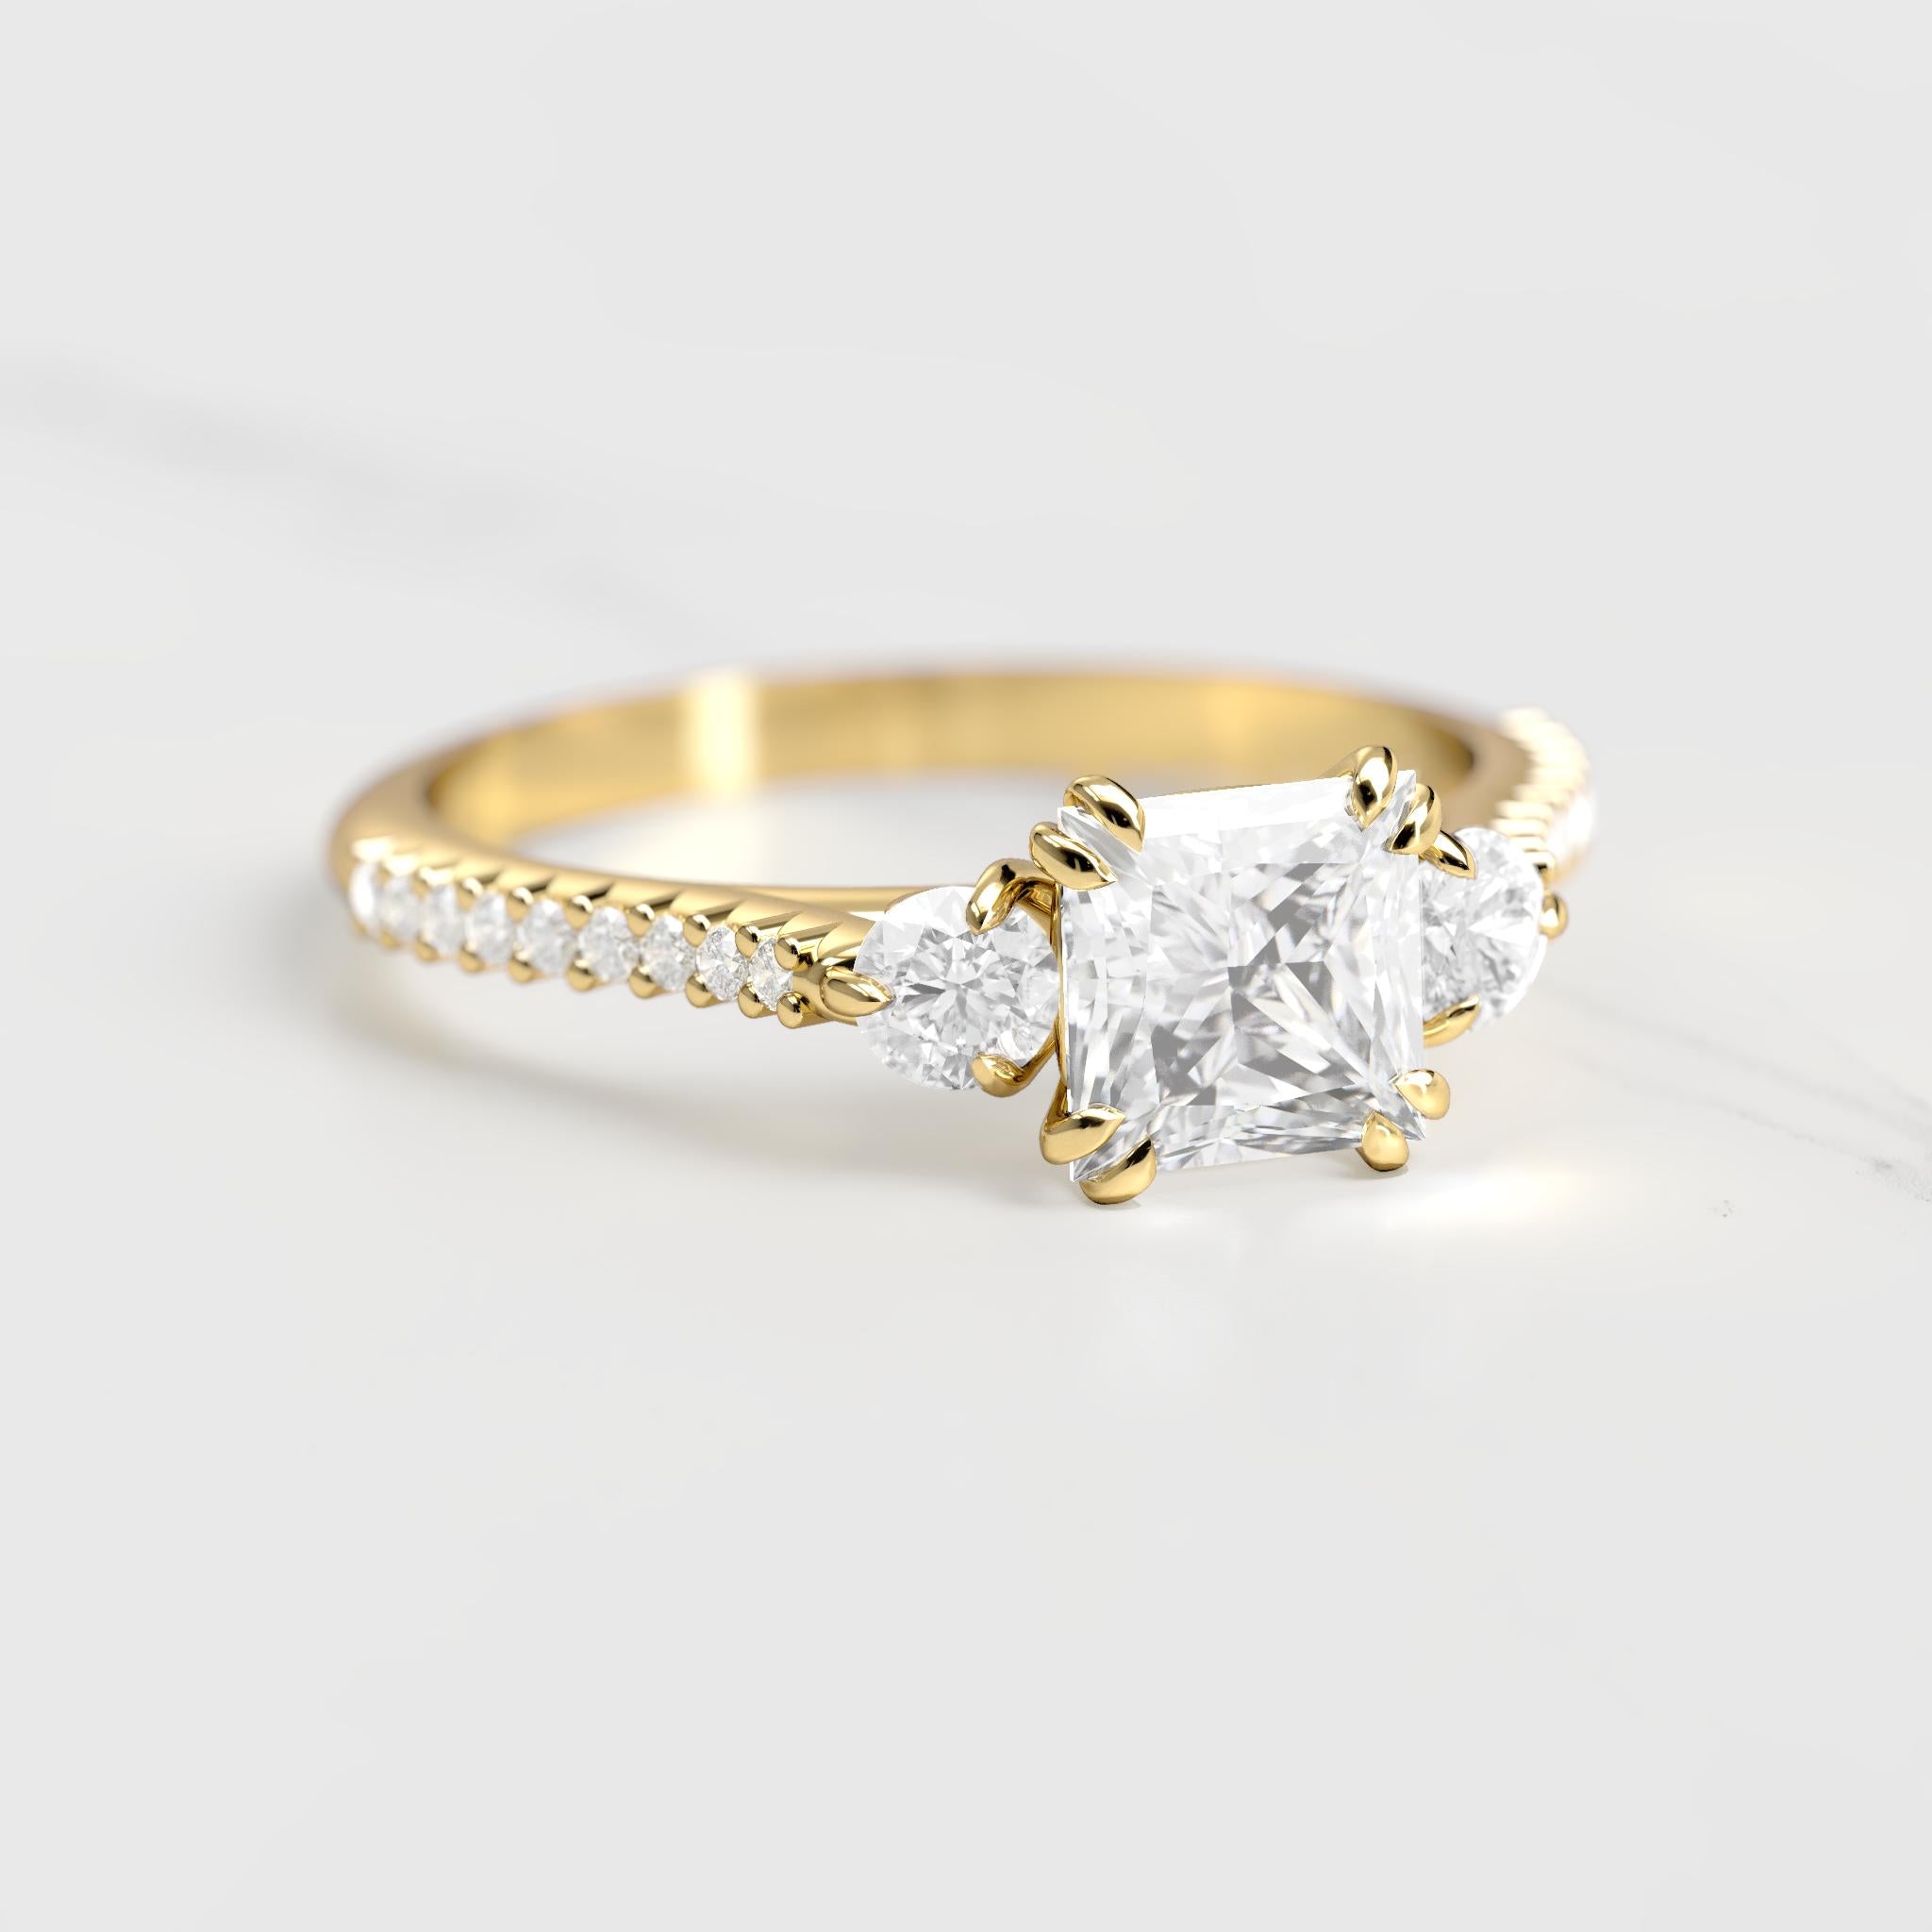 PRINCESS HALF PAVE DIAMOND RING WITH ACCENT STONES - 14k yellow gold / 1.50ct / natural diamond